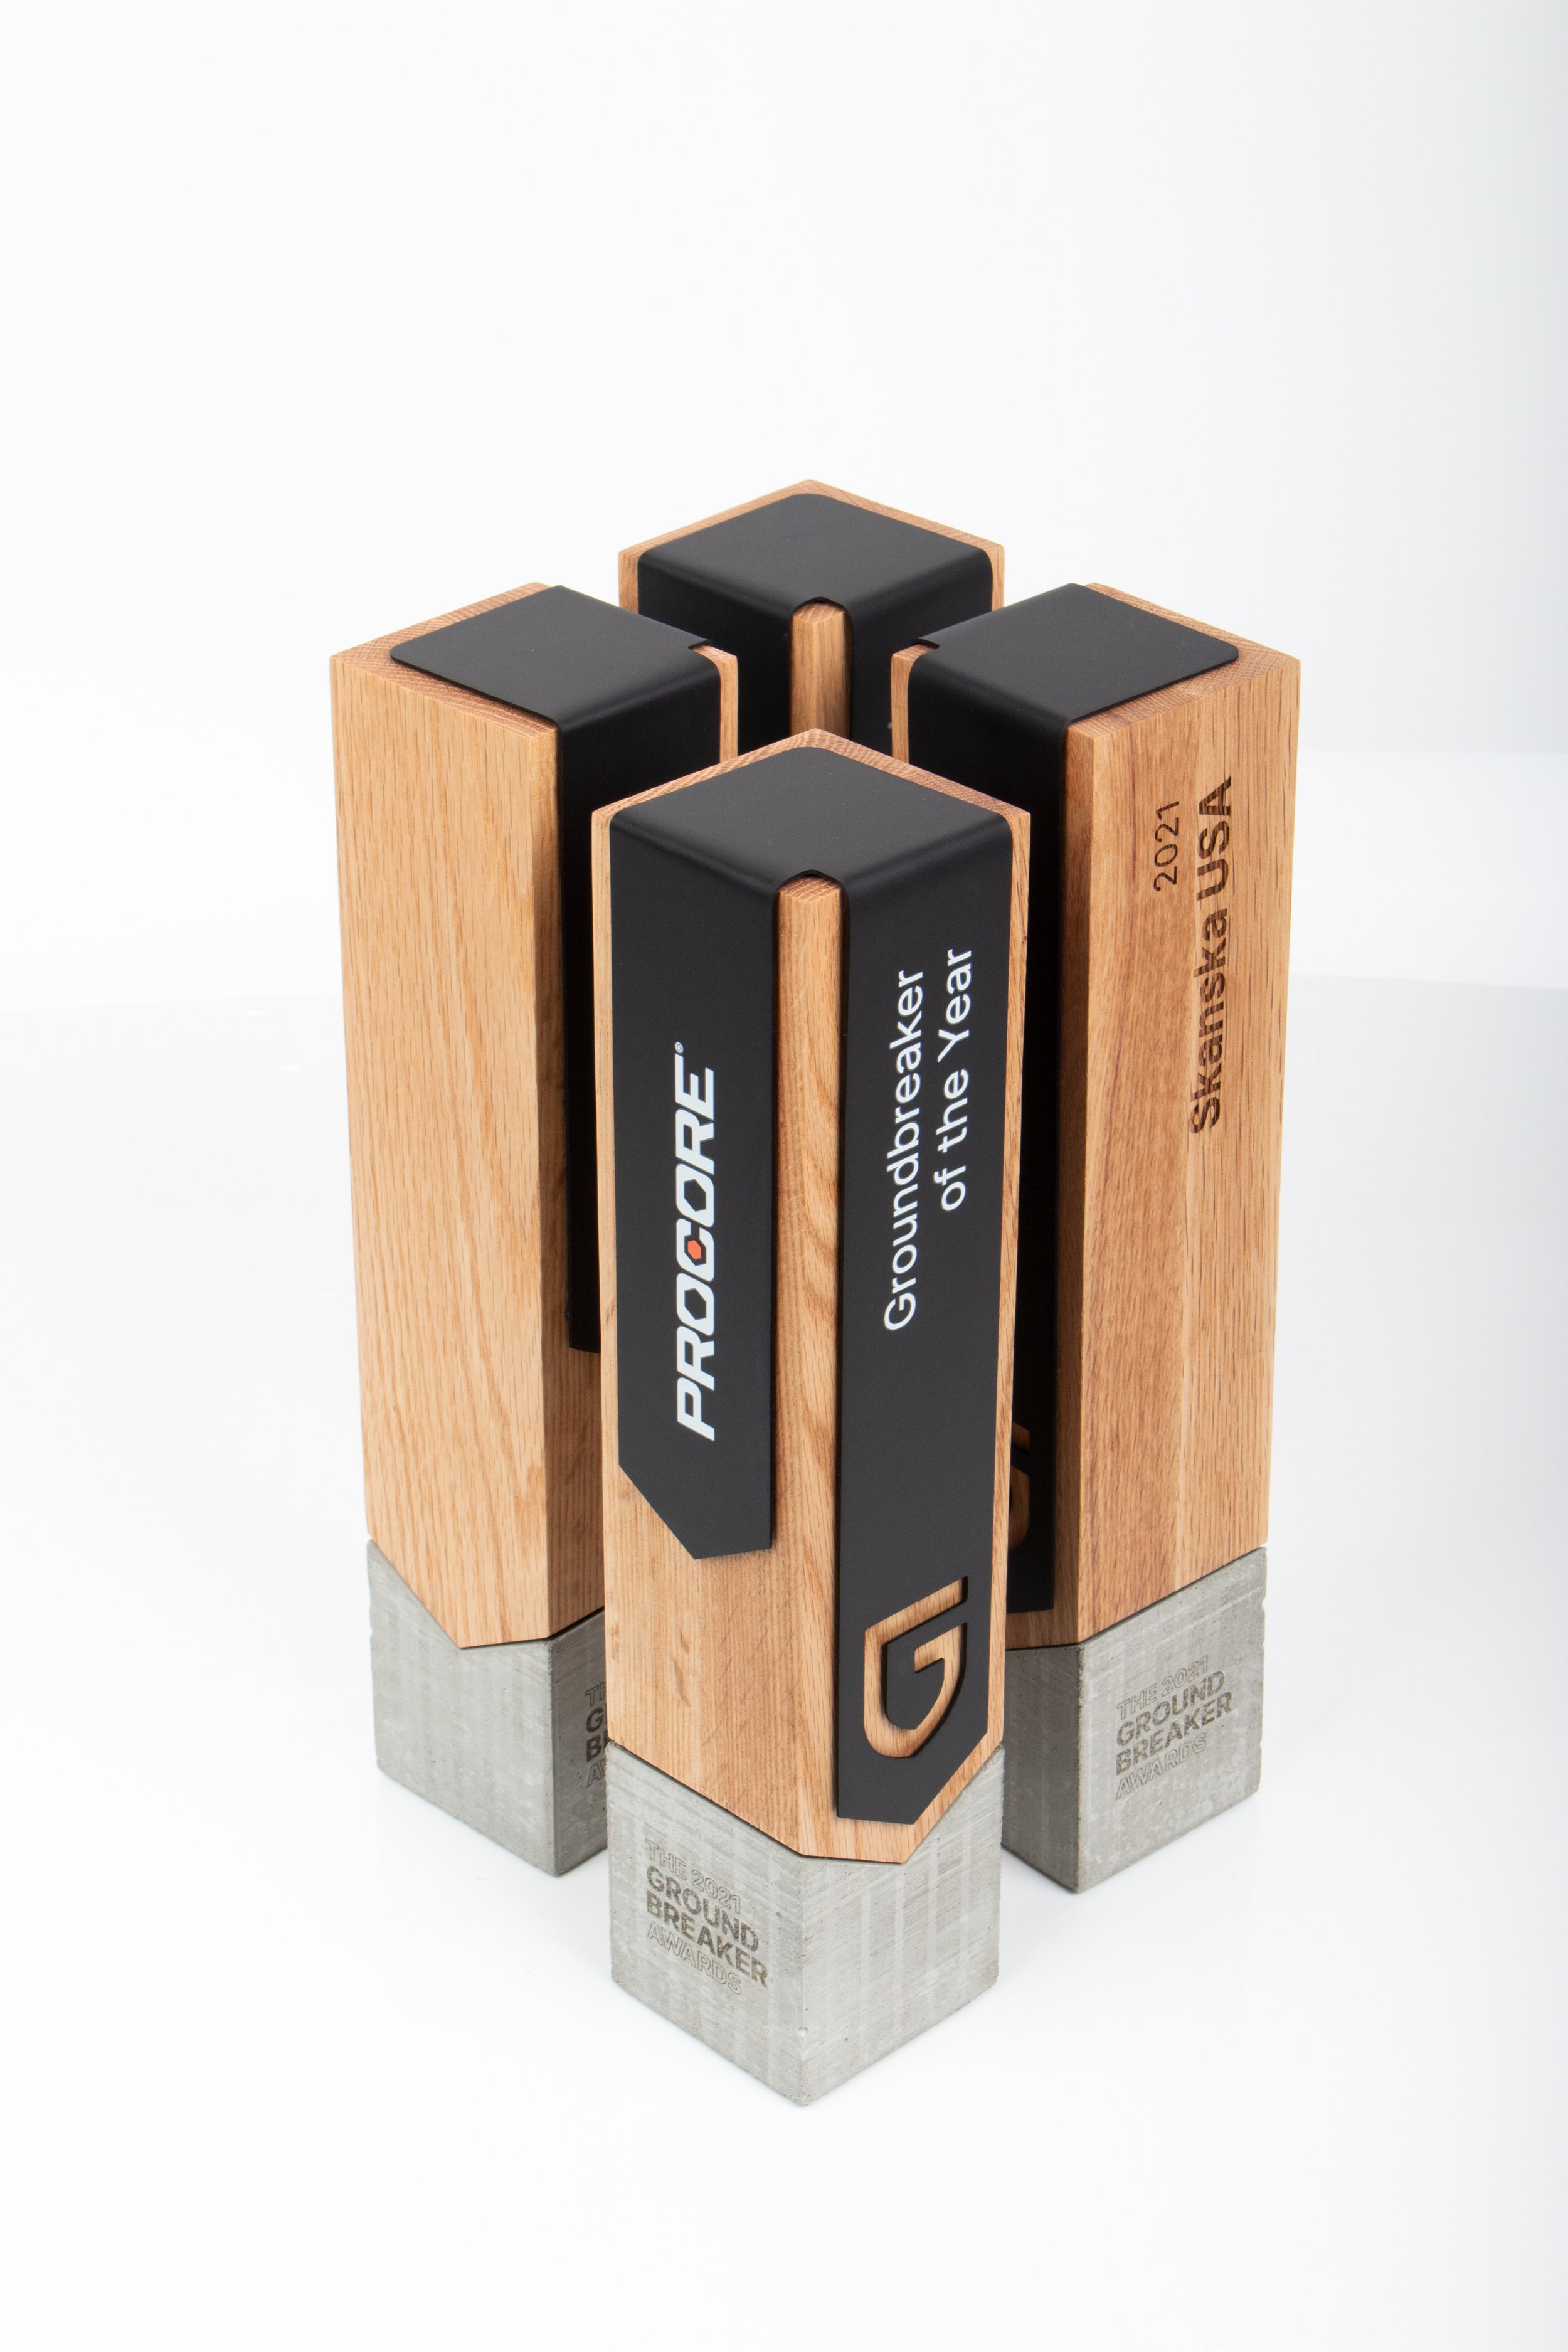 procore ground breaker custom concrete trophies wooden